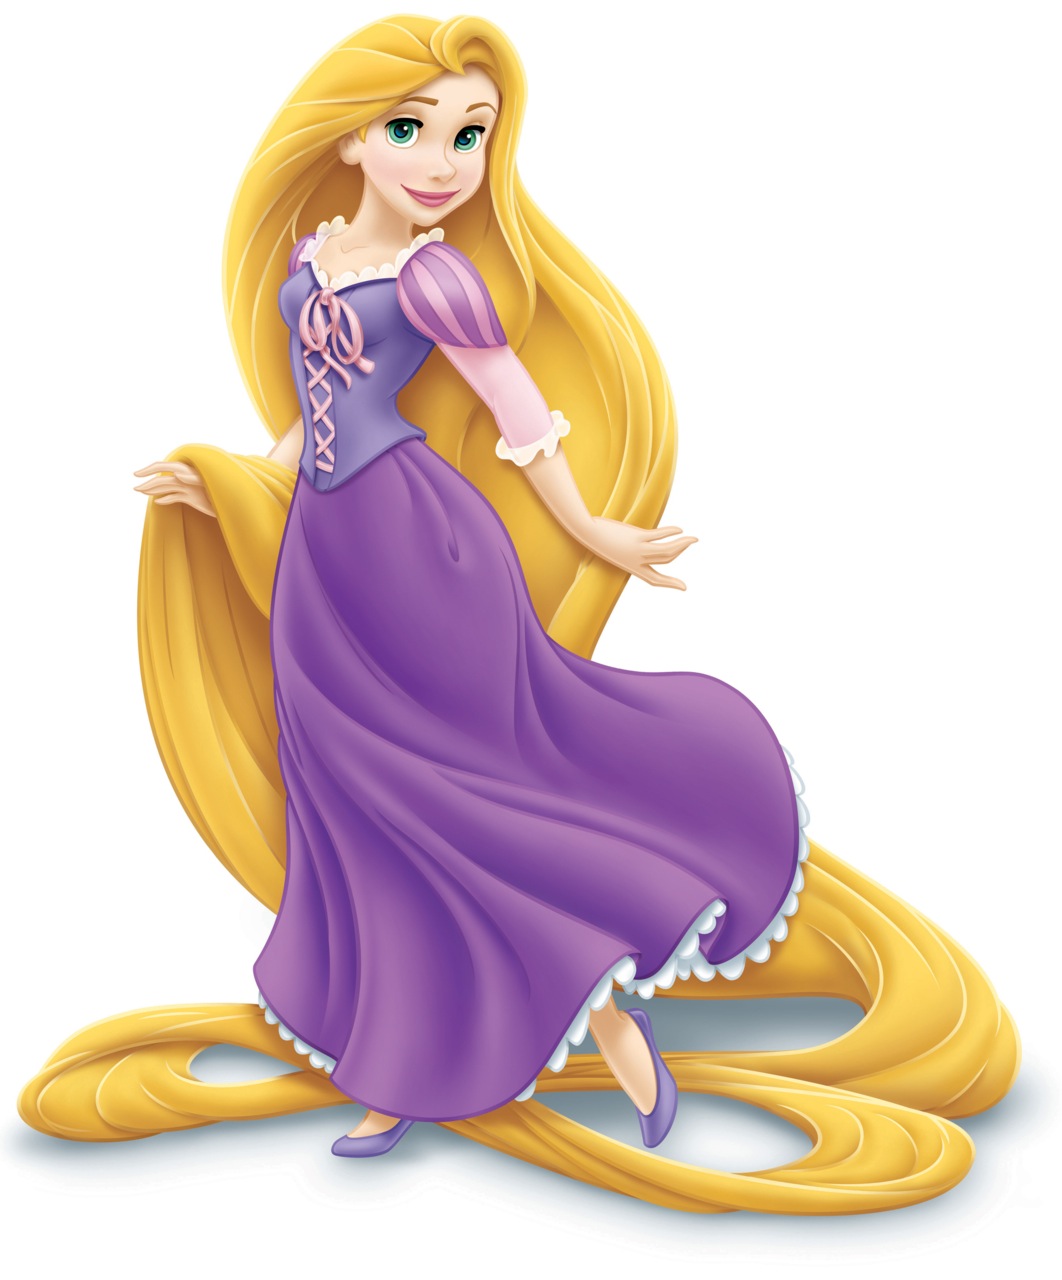  disney princess rapunzel image disney princess rapunzel wallpaper